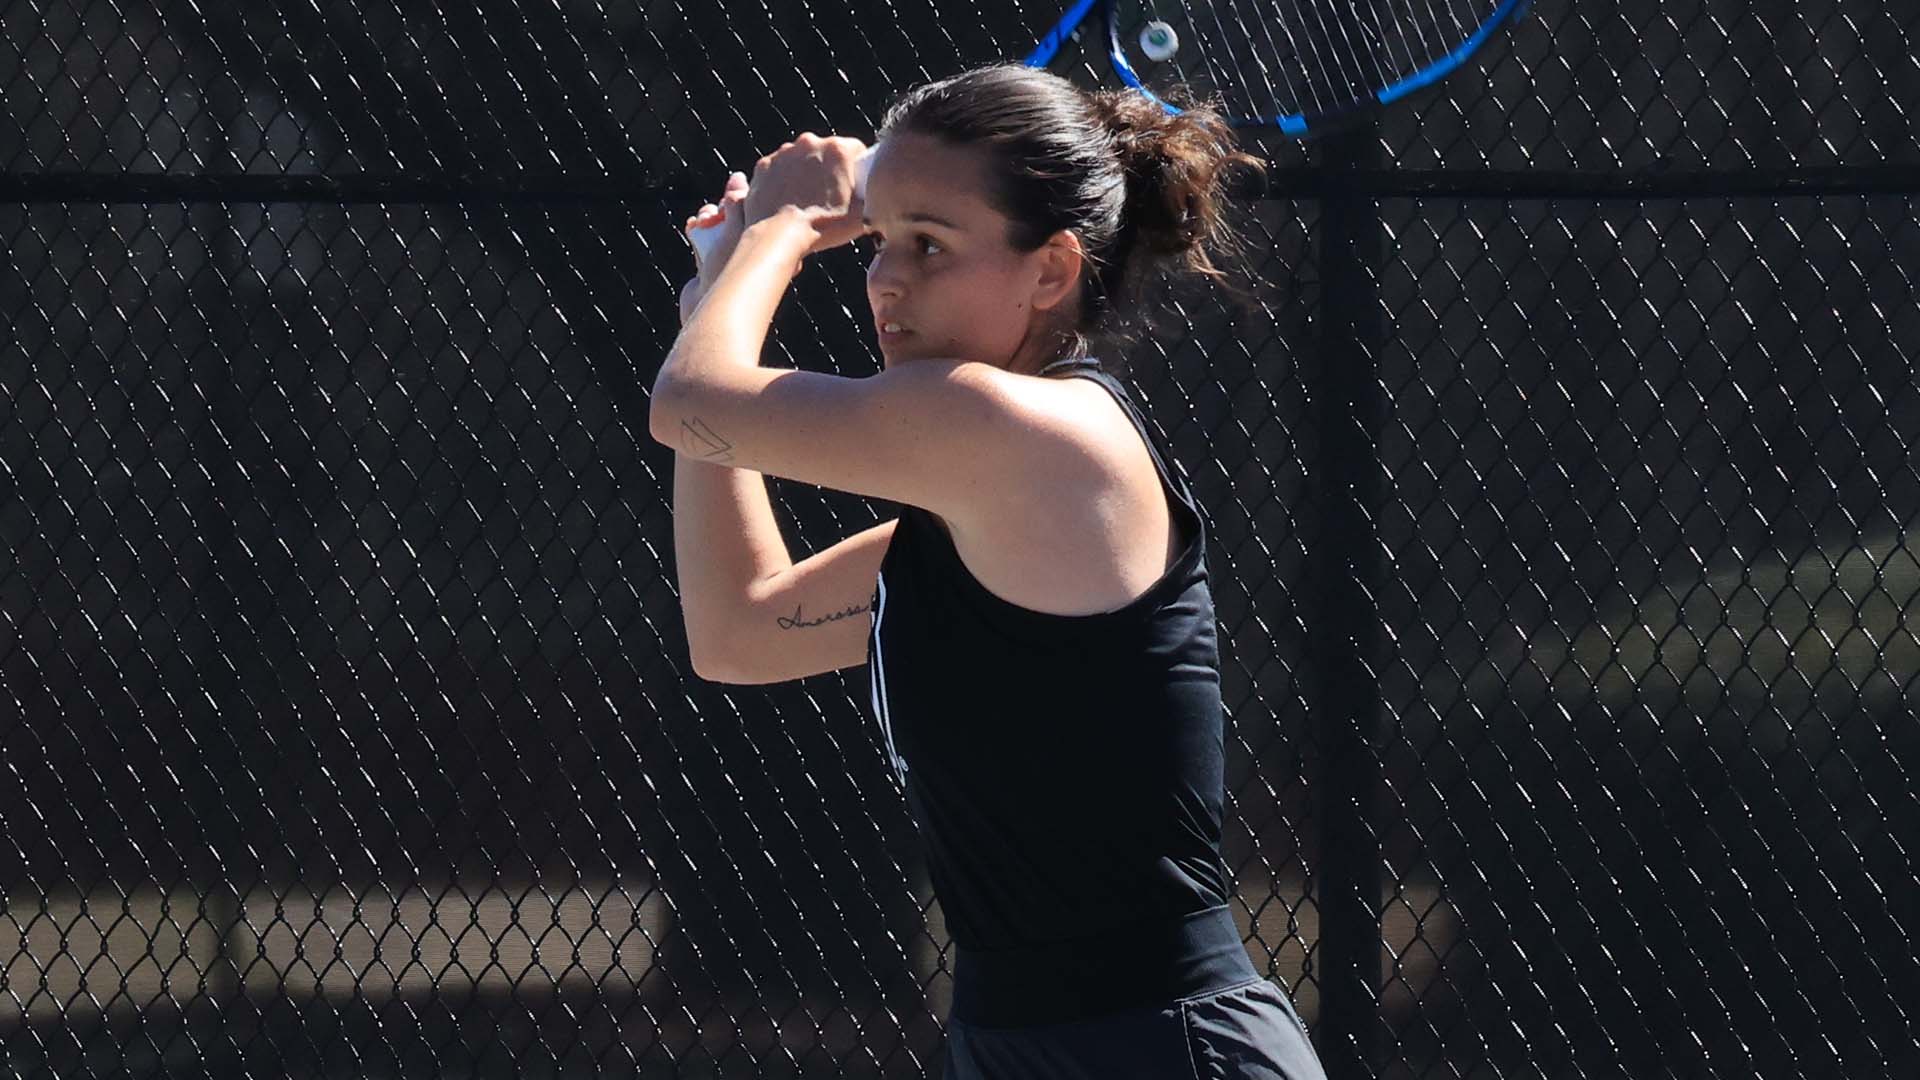 Women's Tennis - Georgia Gwinnett College